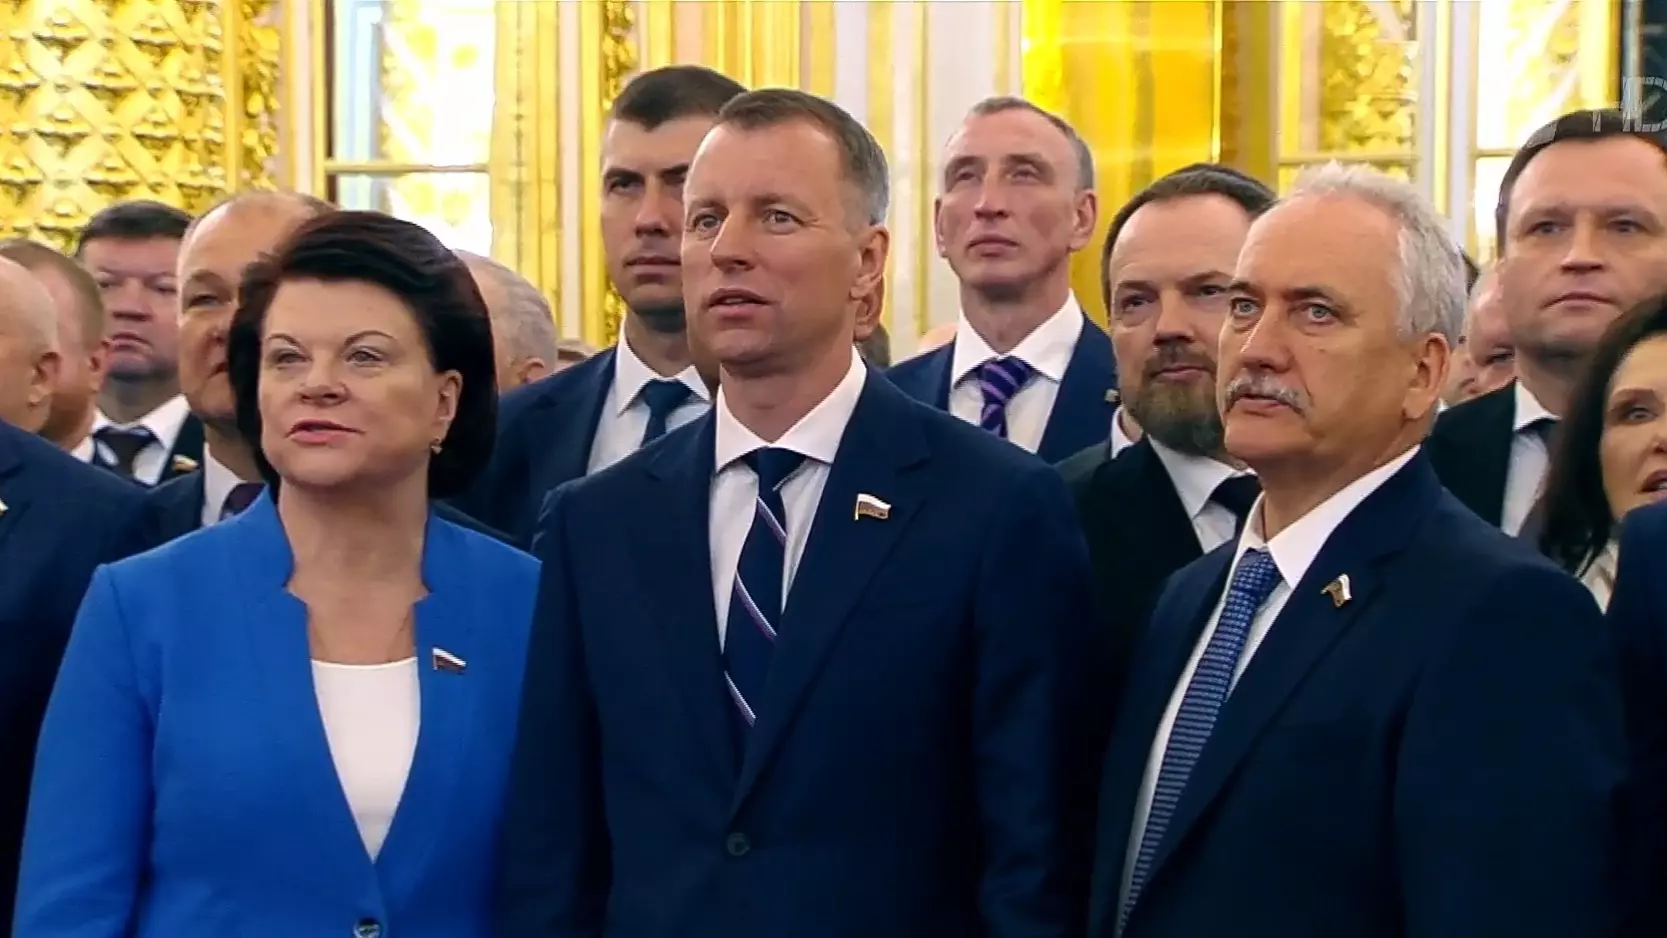 Депутаты Госдумы из Волгограда посетили инаугурацию Владимира Путина